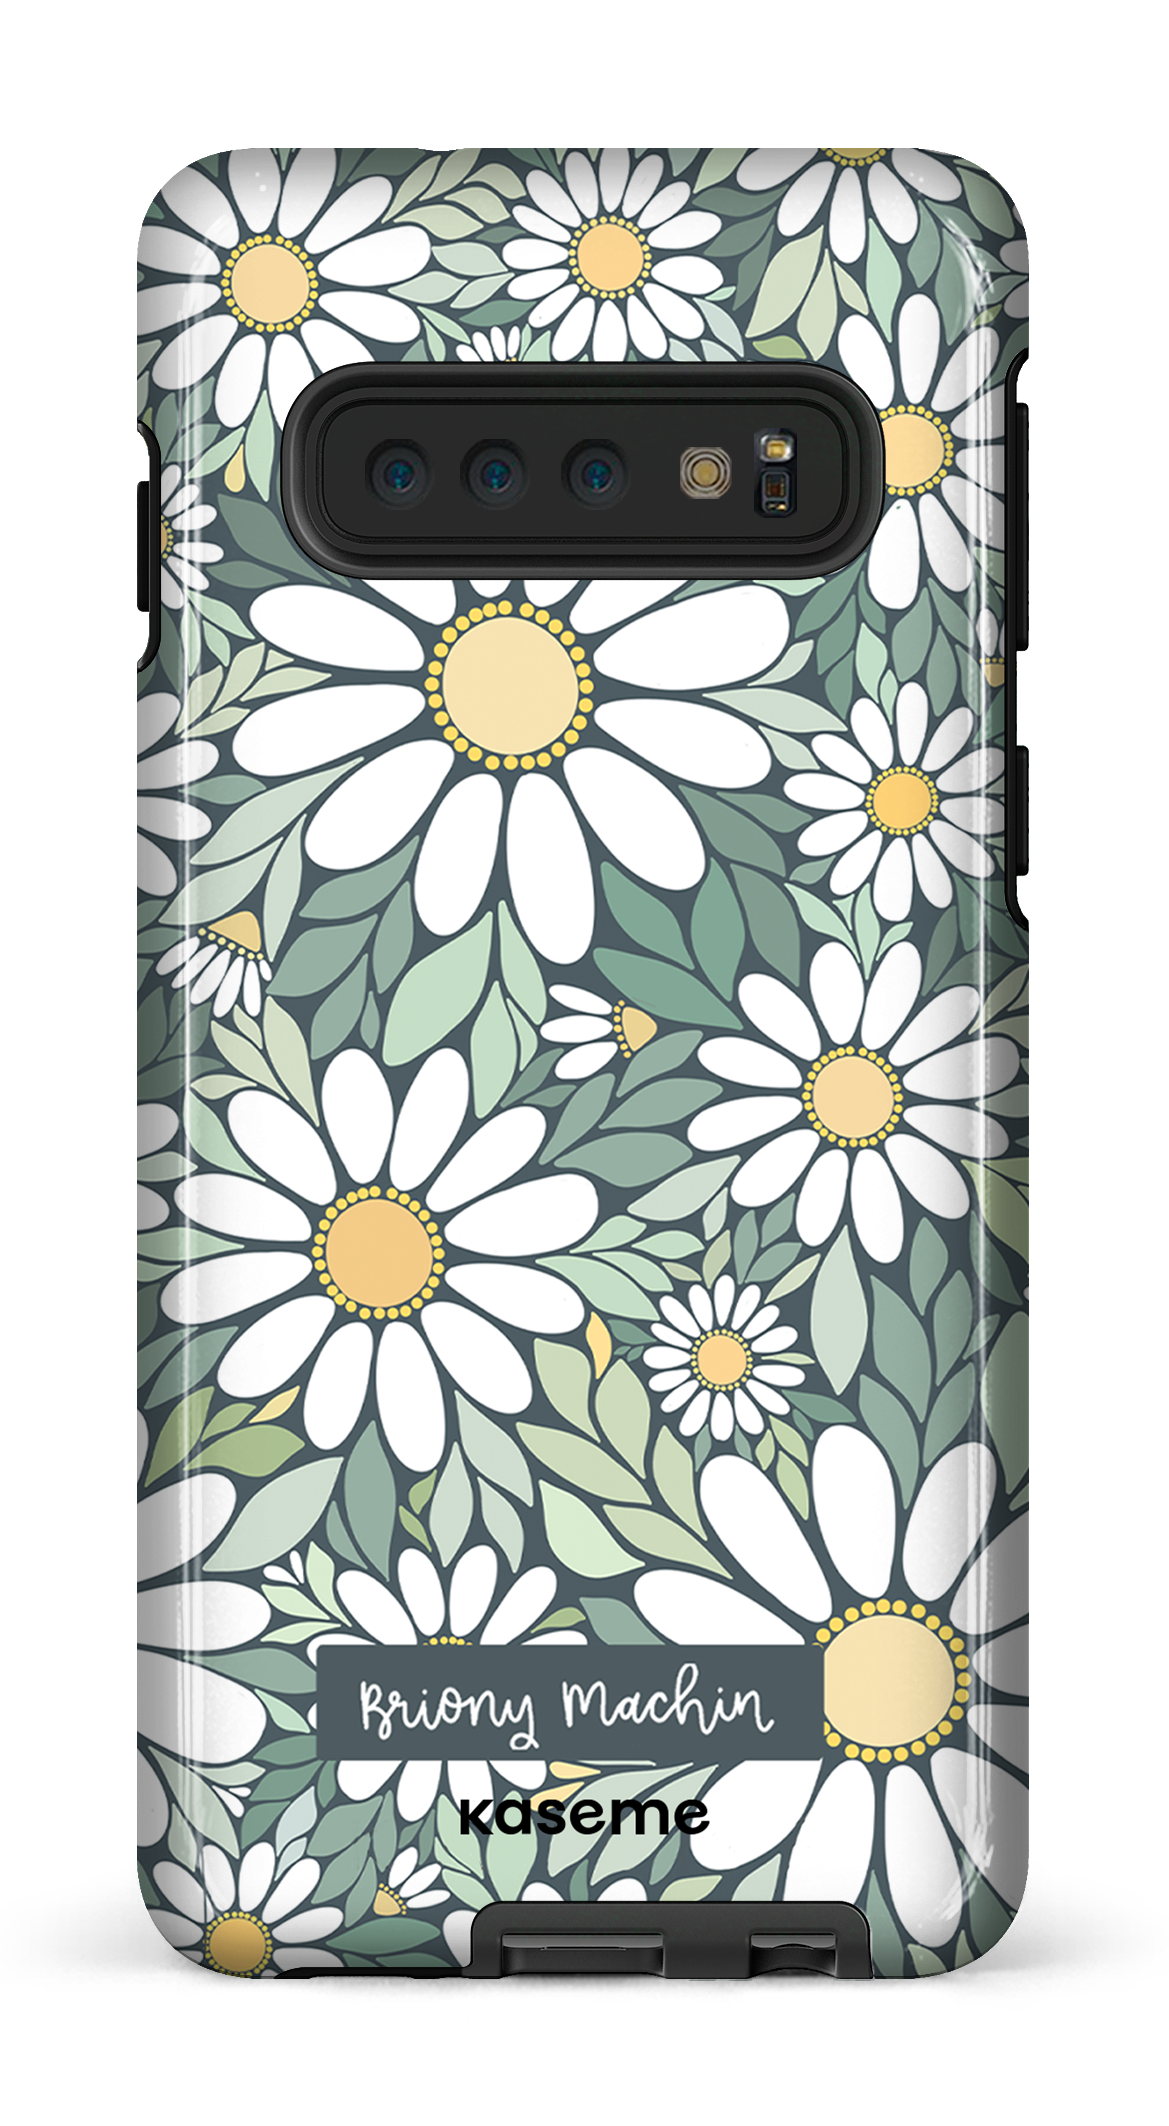 Daisy Blooms by Briony Machin - Galaxy S10